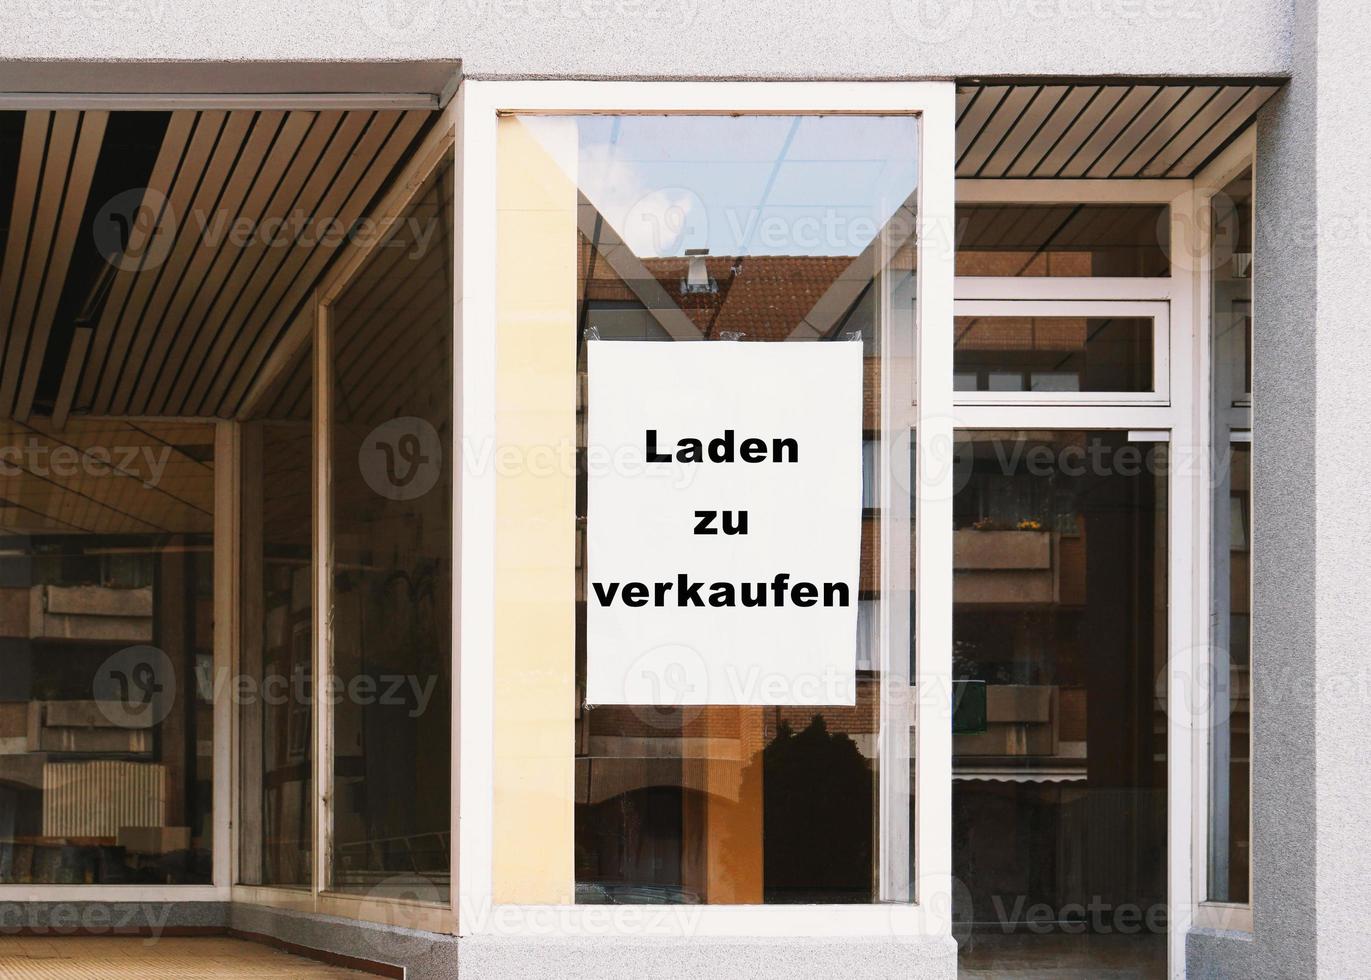 laden zu verkaufen - traduz-se como loja à venda - sinal alemão foto